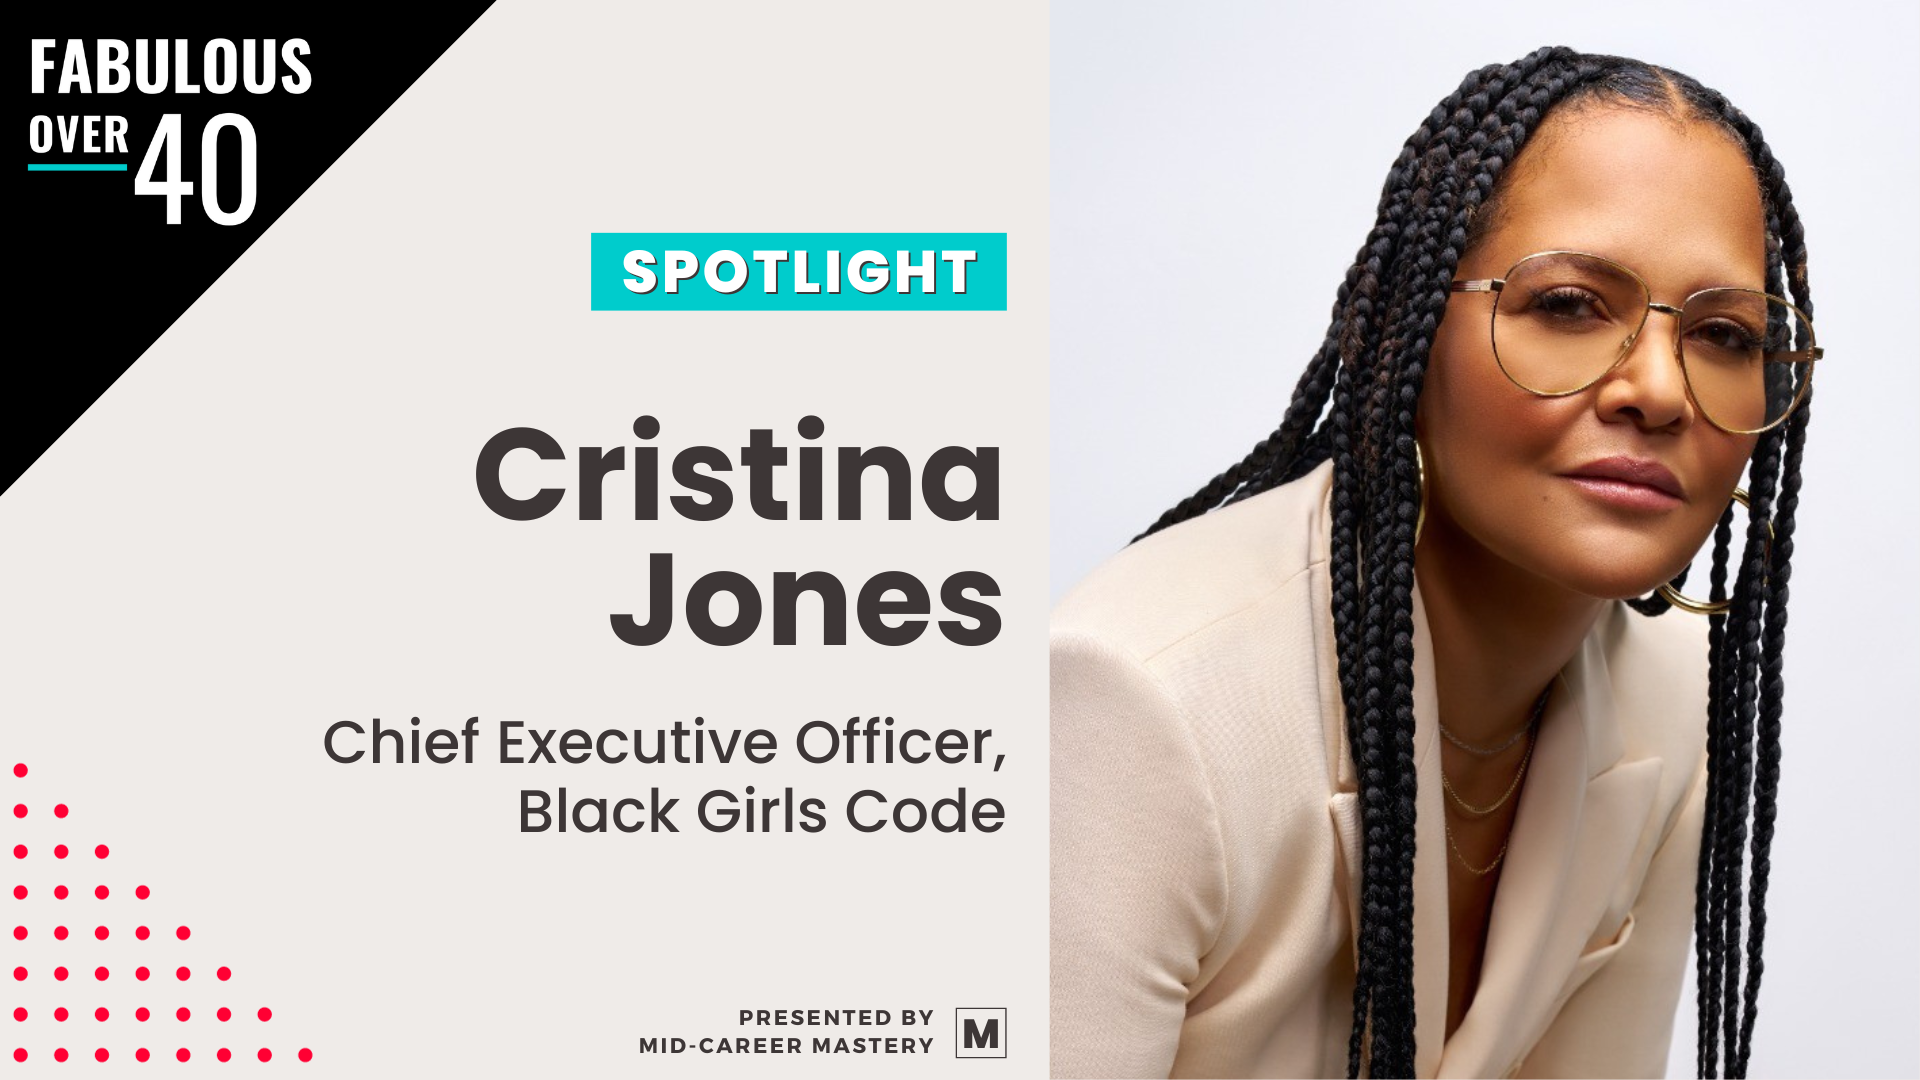 Fabulous Over 40 Spotlight: Meet Cristina Jones. CEO of Black Girls Code.